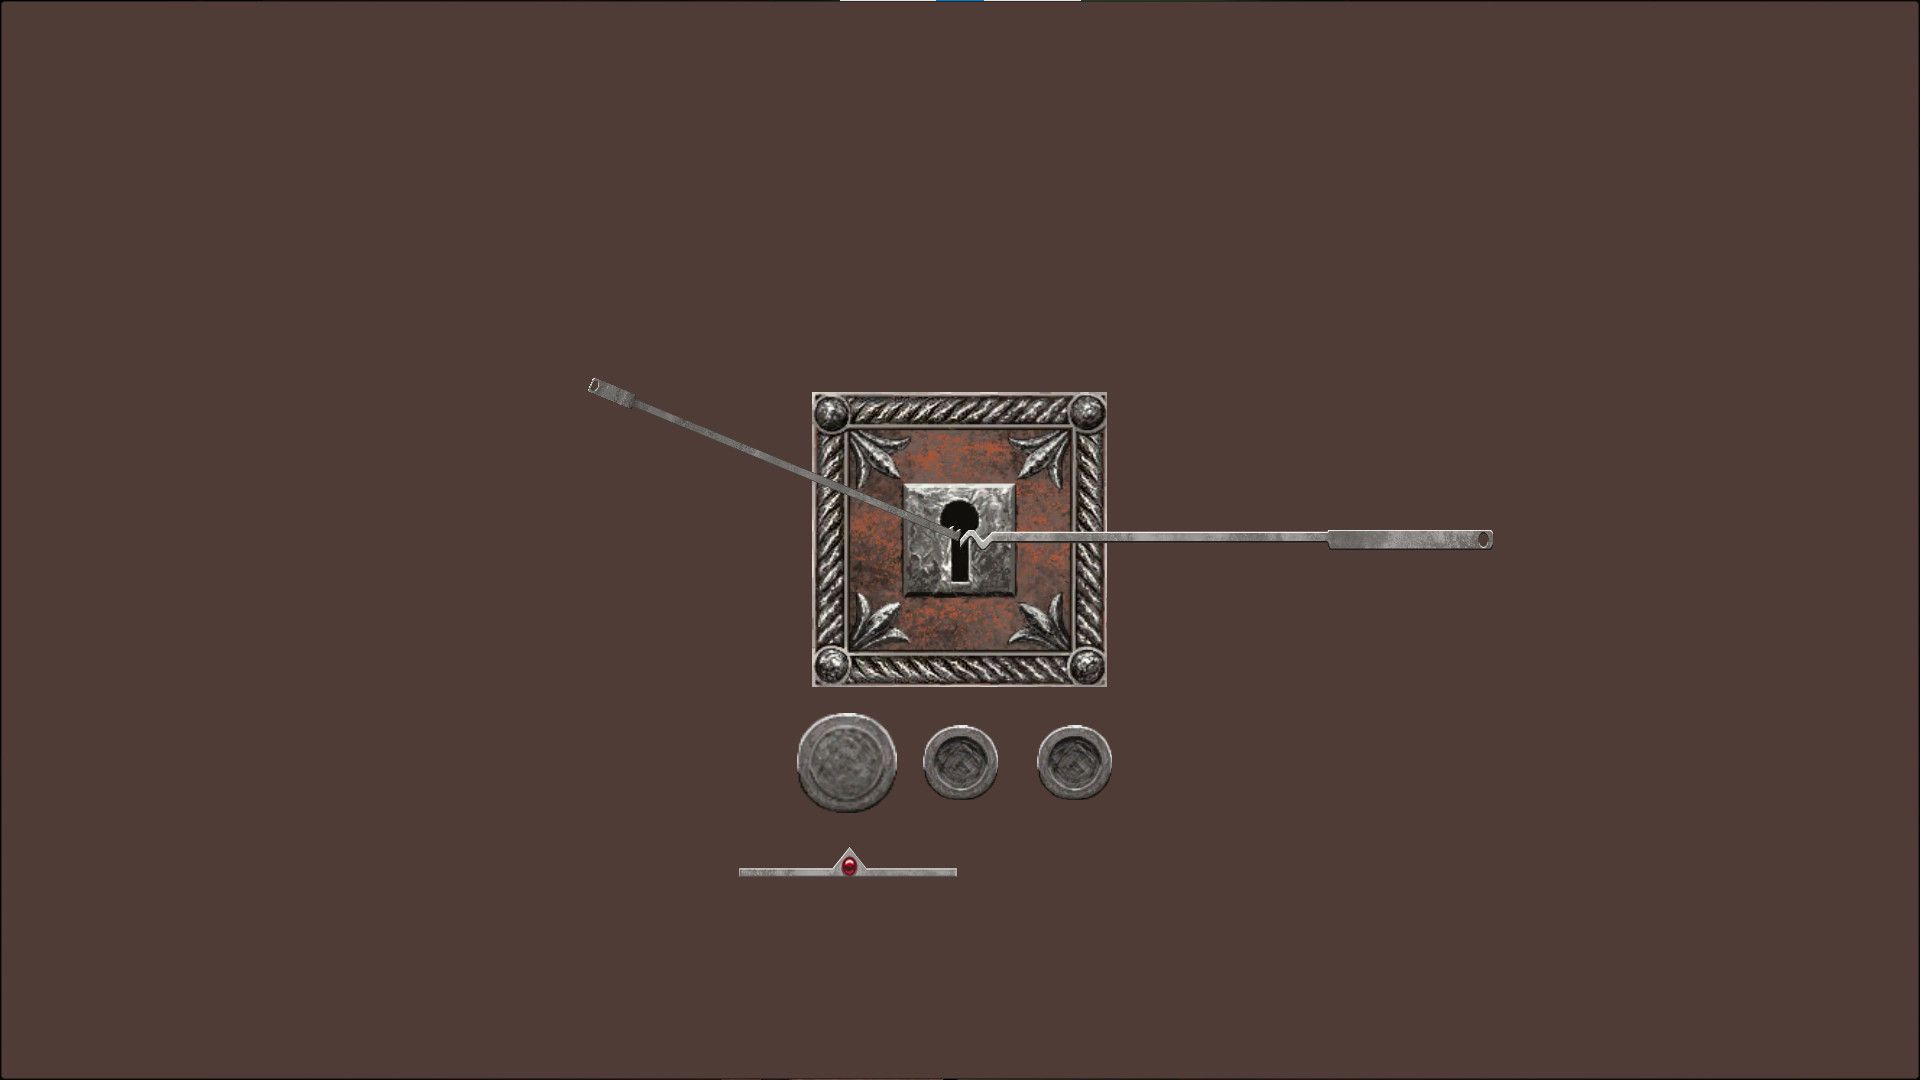 Screenshot of a sene from a video game showing an old lock mechanism